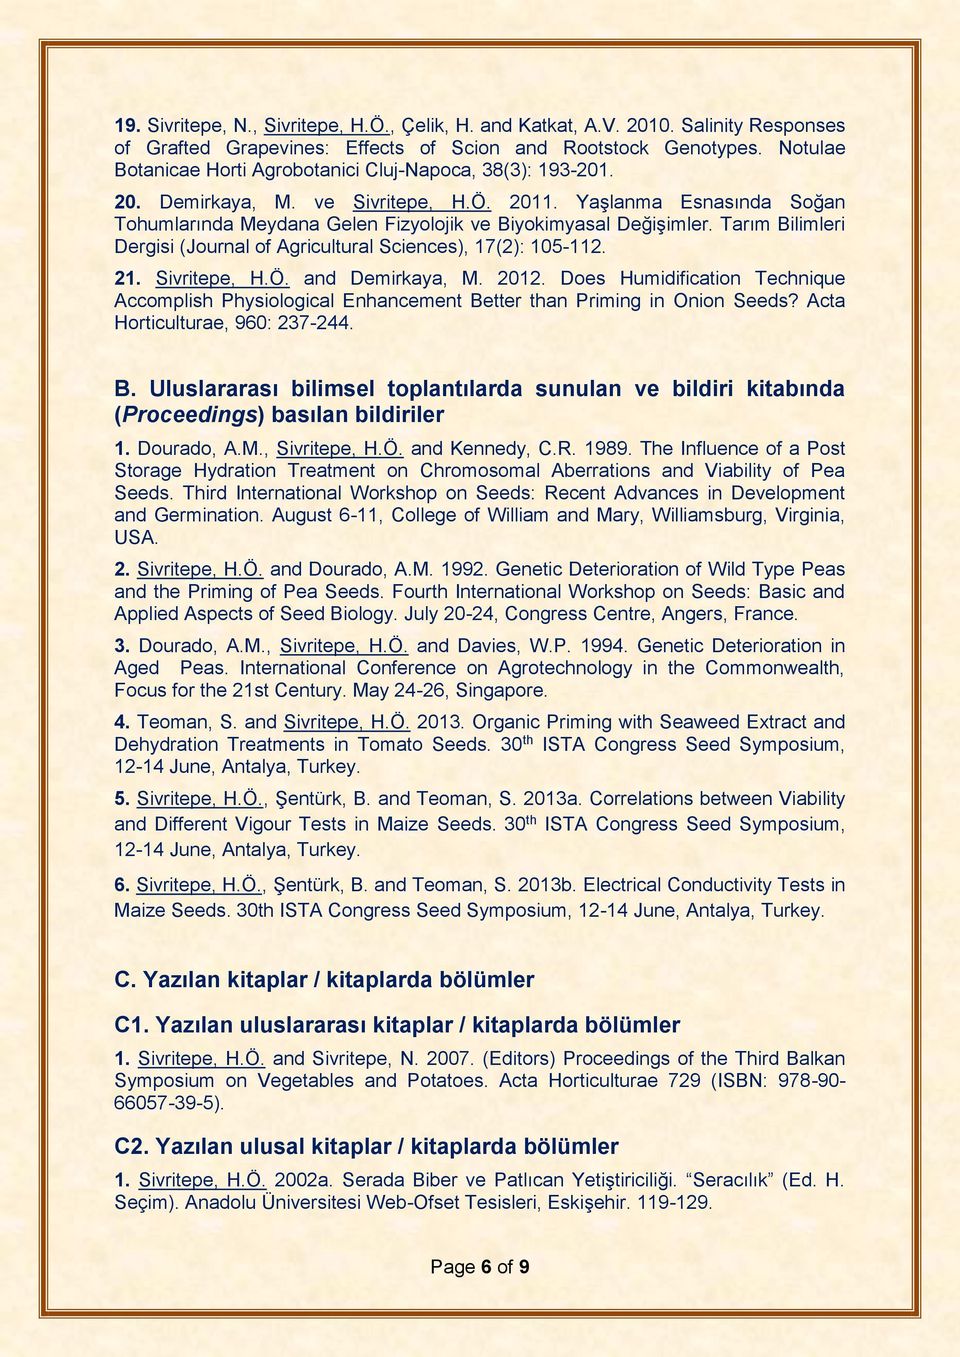 Tarım Bilimleri Dergisi (Journal of Agricultural Sciences), 17(2): 105-112. 21. Sivritepe, H.Ö. and Demirkaya, M. 2012.